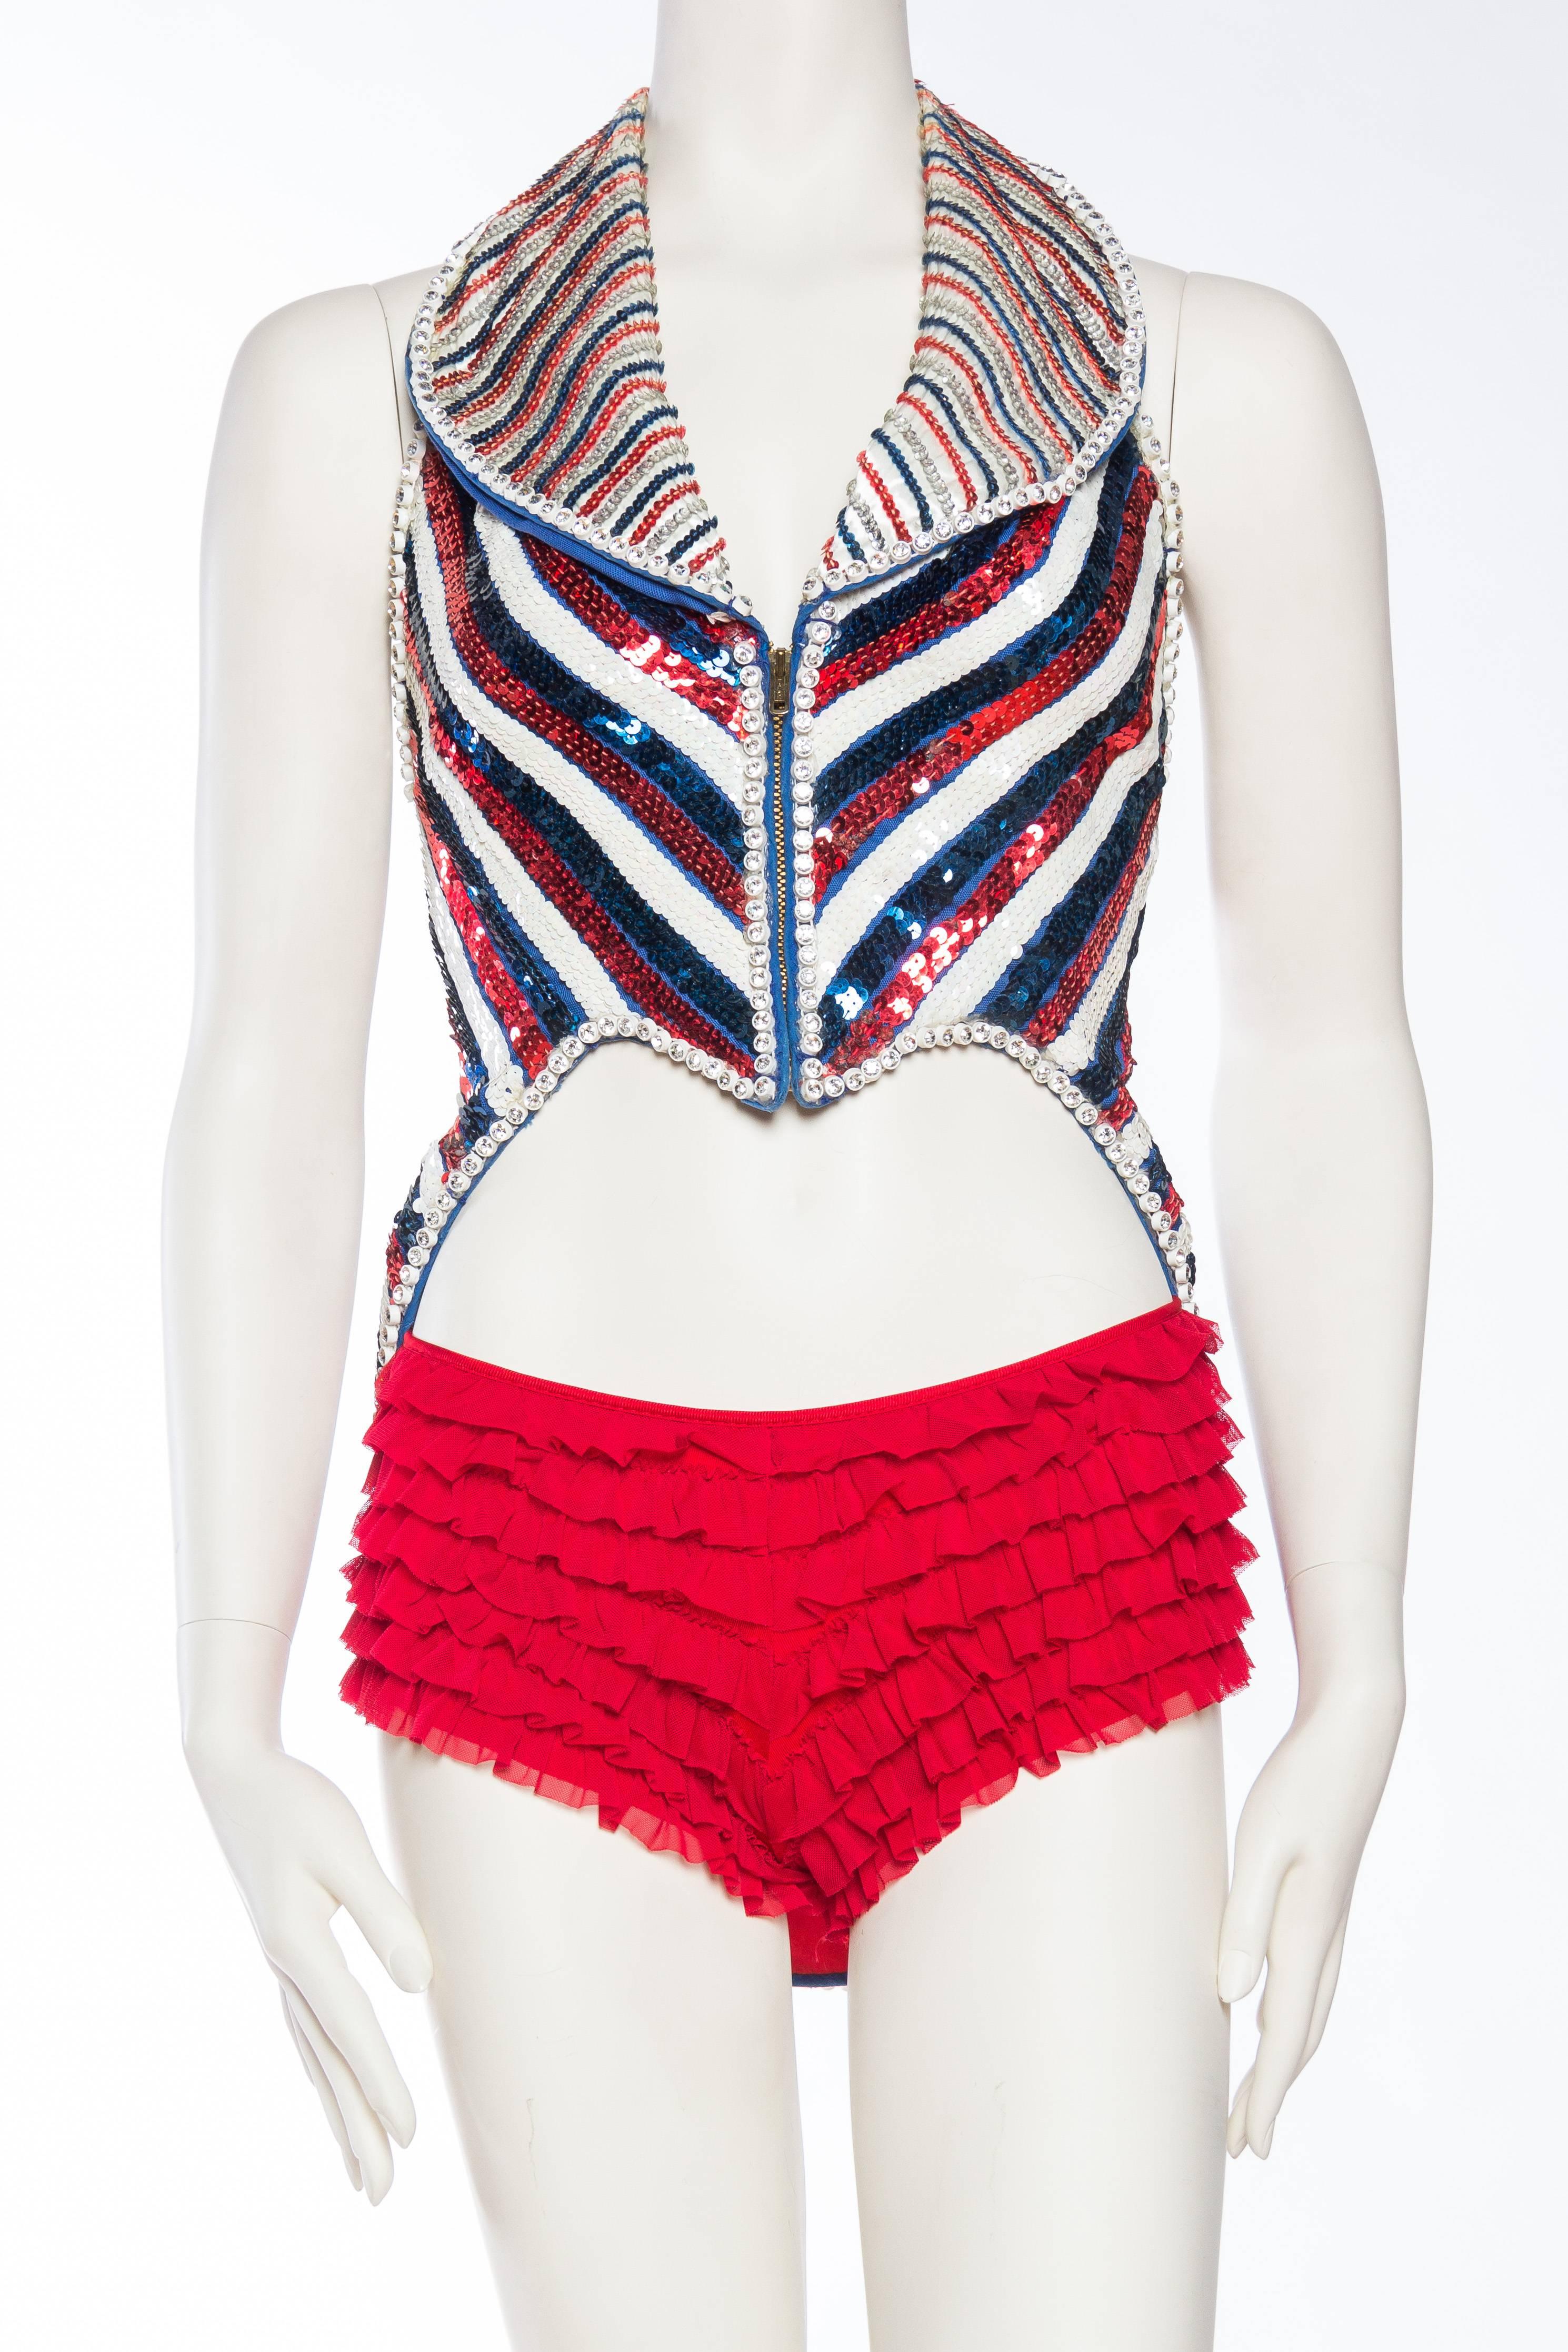 1970S Hedy Jo Star Original Red, White & Blue Sequined Vegas Patriotic Showgirl Bustier Halter Top